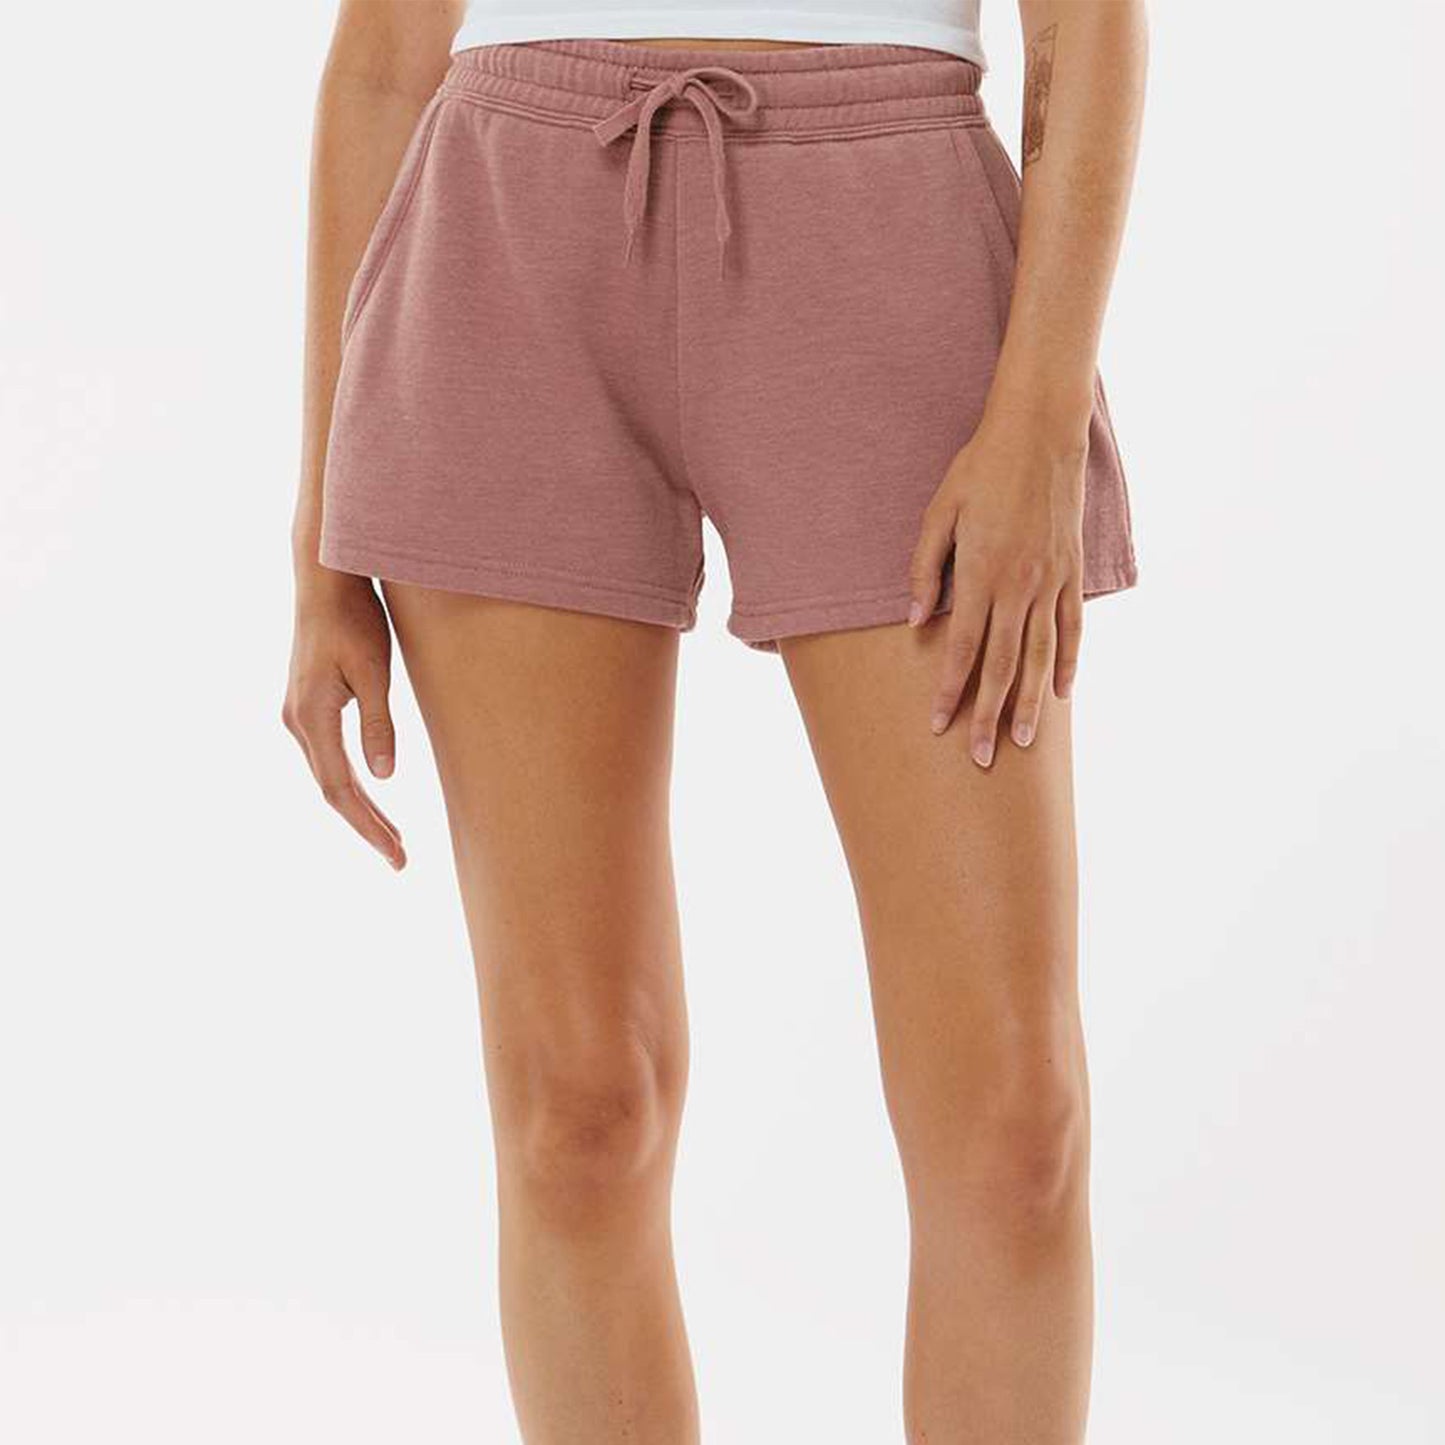 Shorts - Vintage maroon - Assumption HS